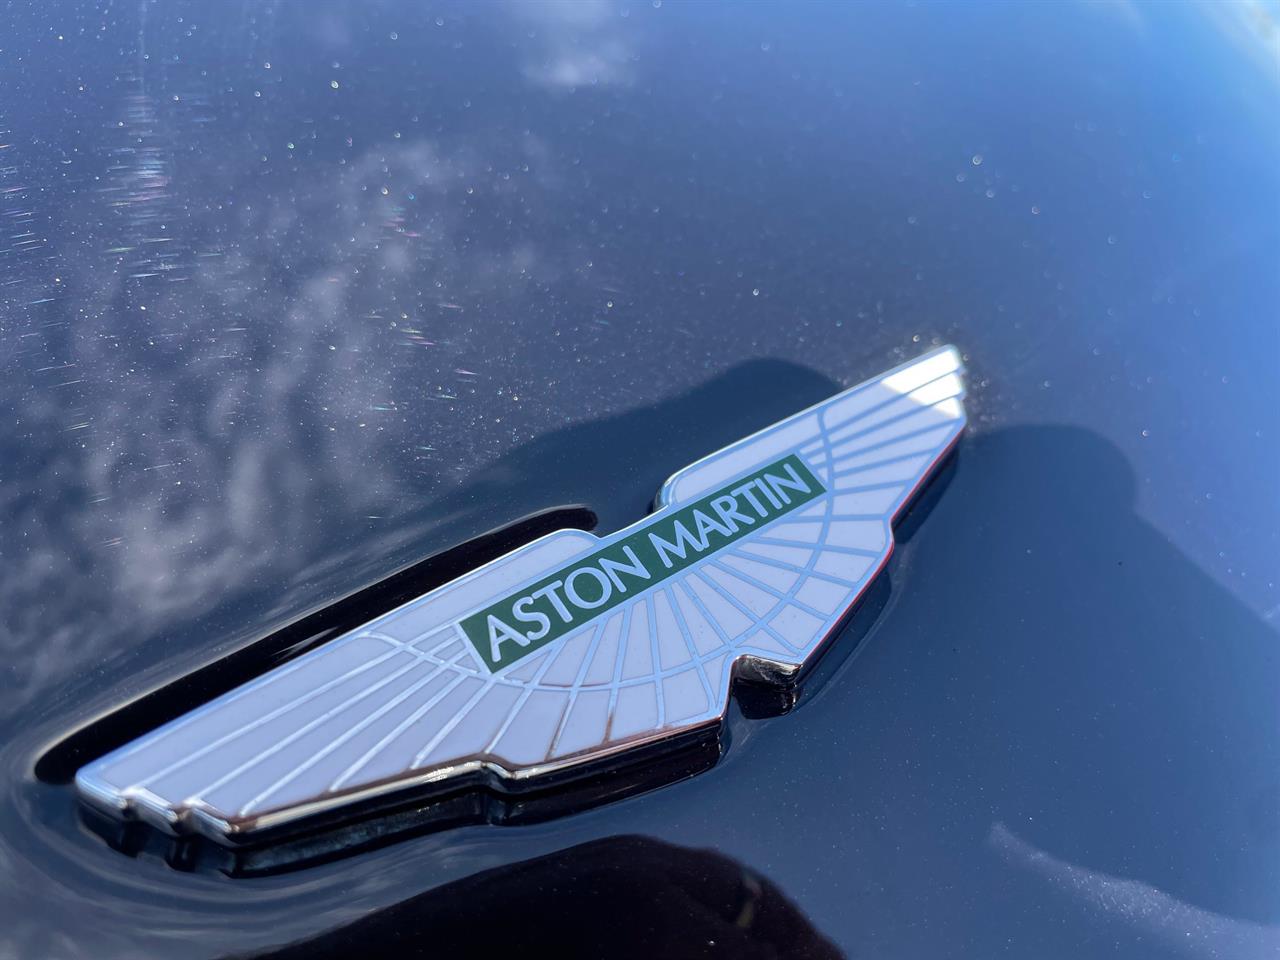 2012 Aston Martin Rapide